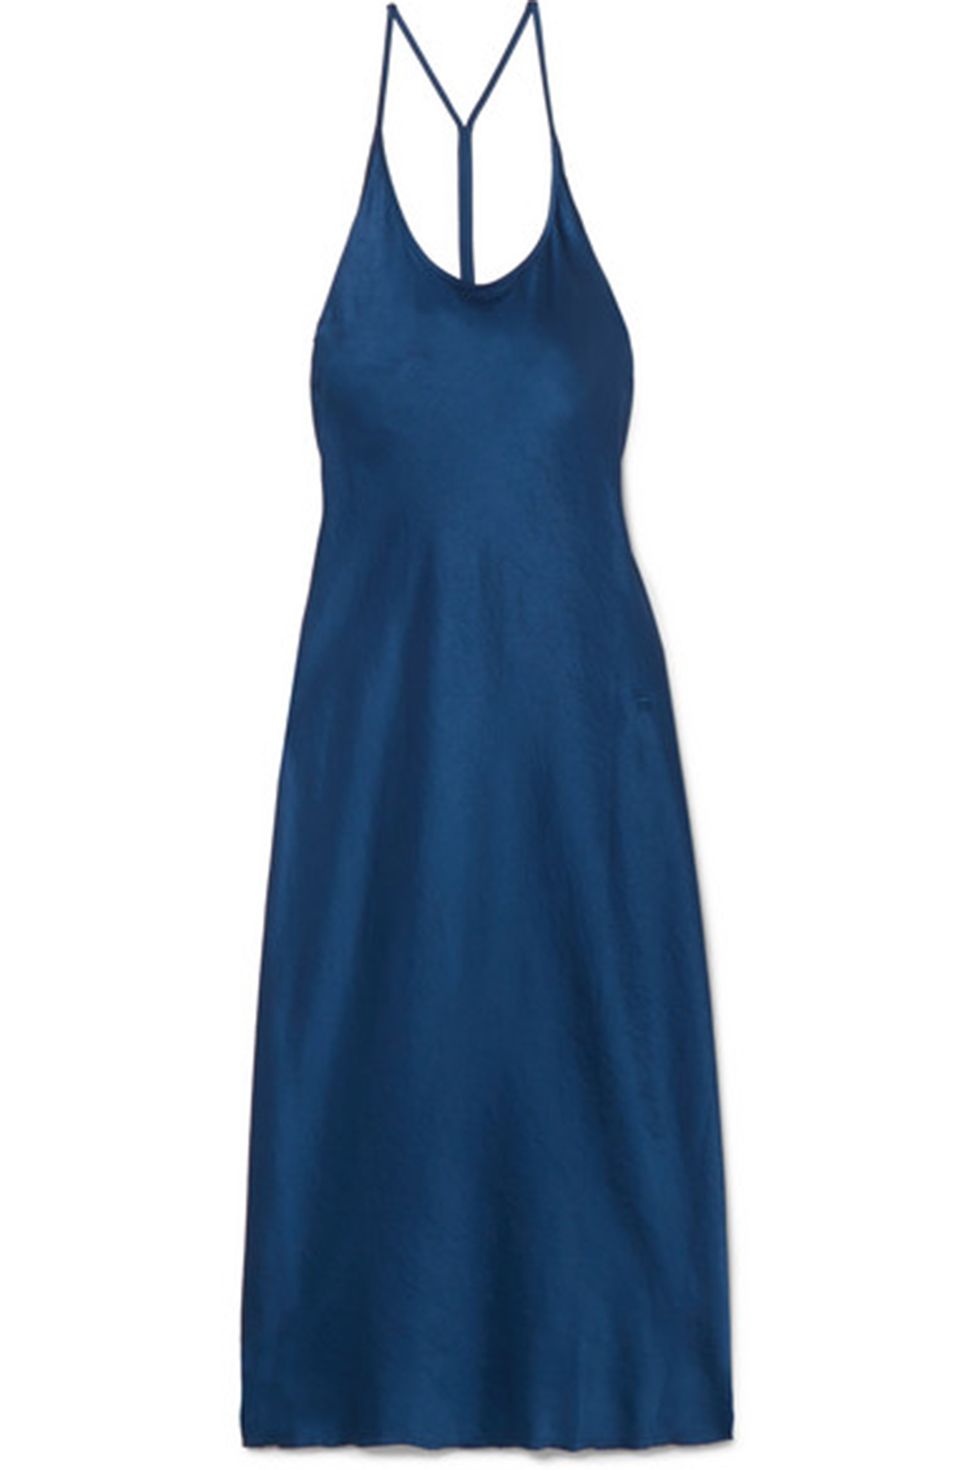 Clothing, Dress, Blue, Cobalt blue, Day dress, Cocktail dress, Turquoise, One-piece garment, Electric blue, Neck, 